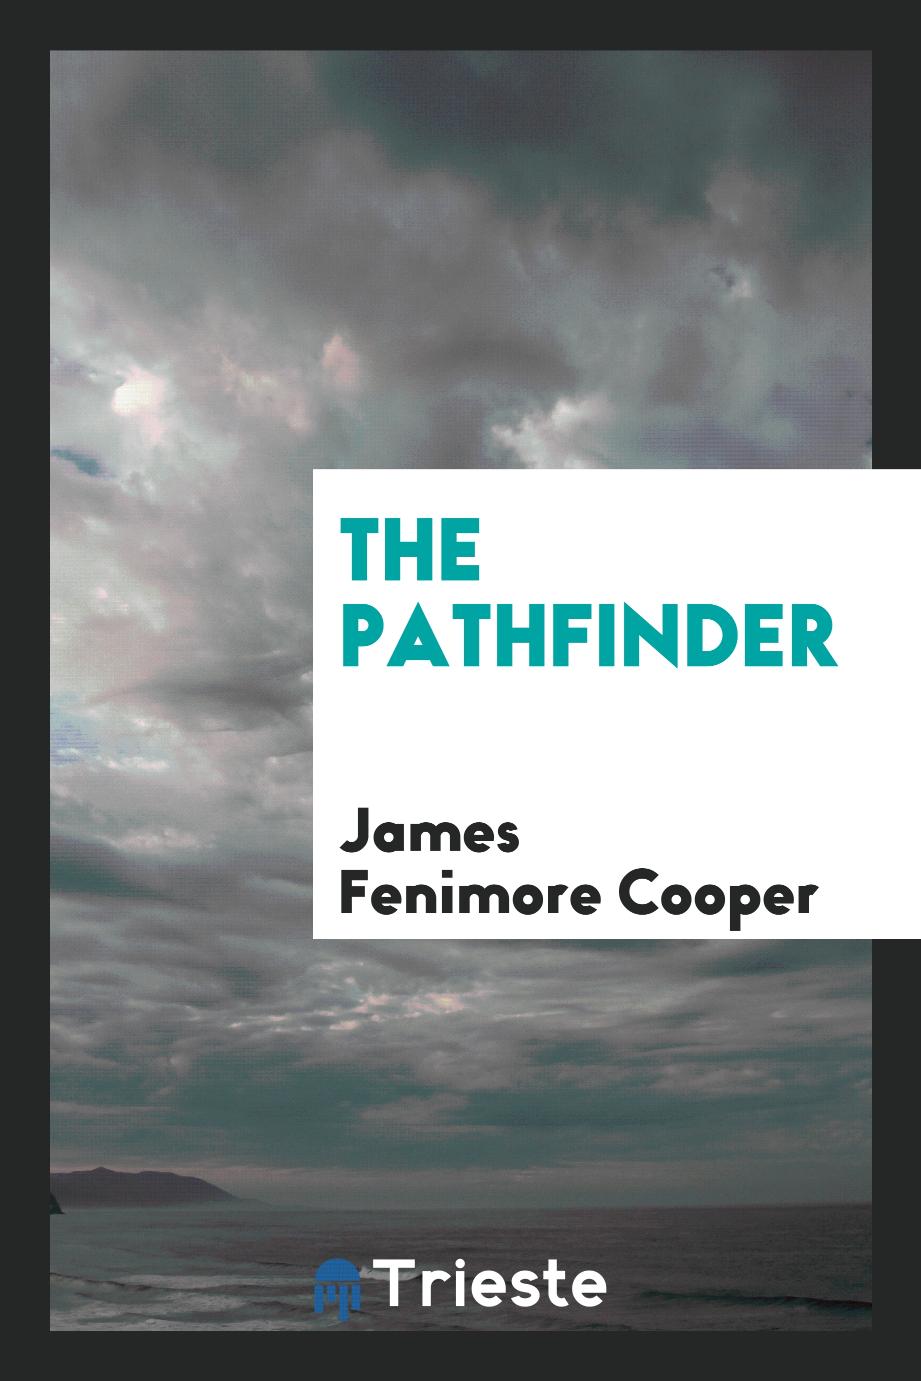 The pathfinder